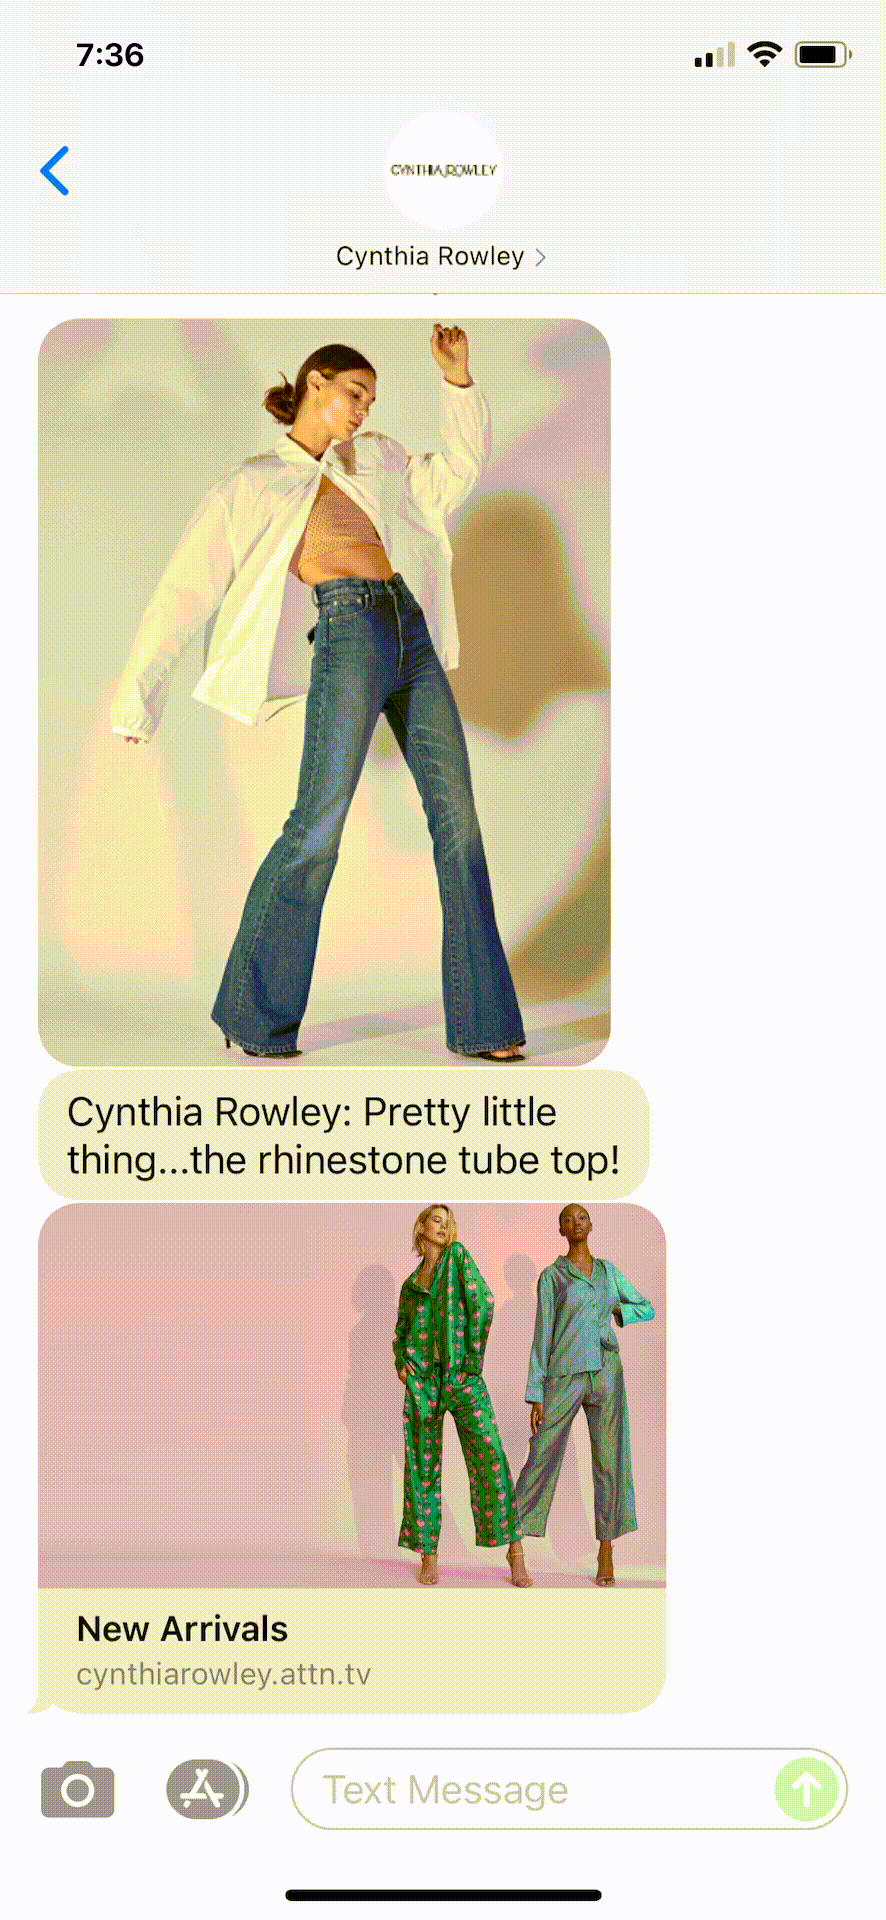 Cynthia-Rowley-Text-Message-Marketing-Example-09.18.2021